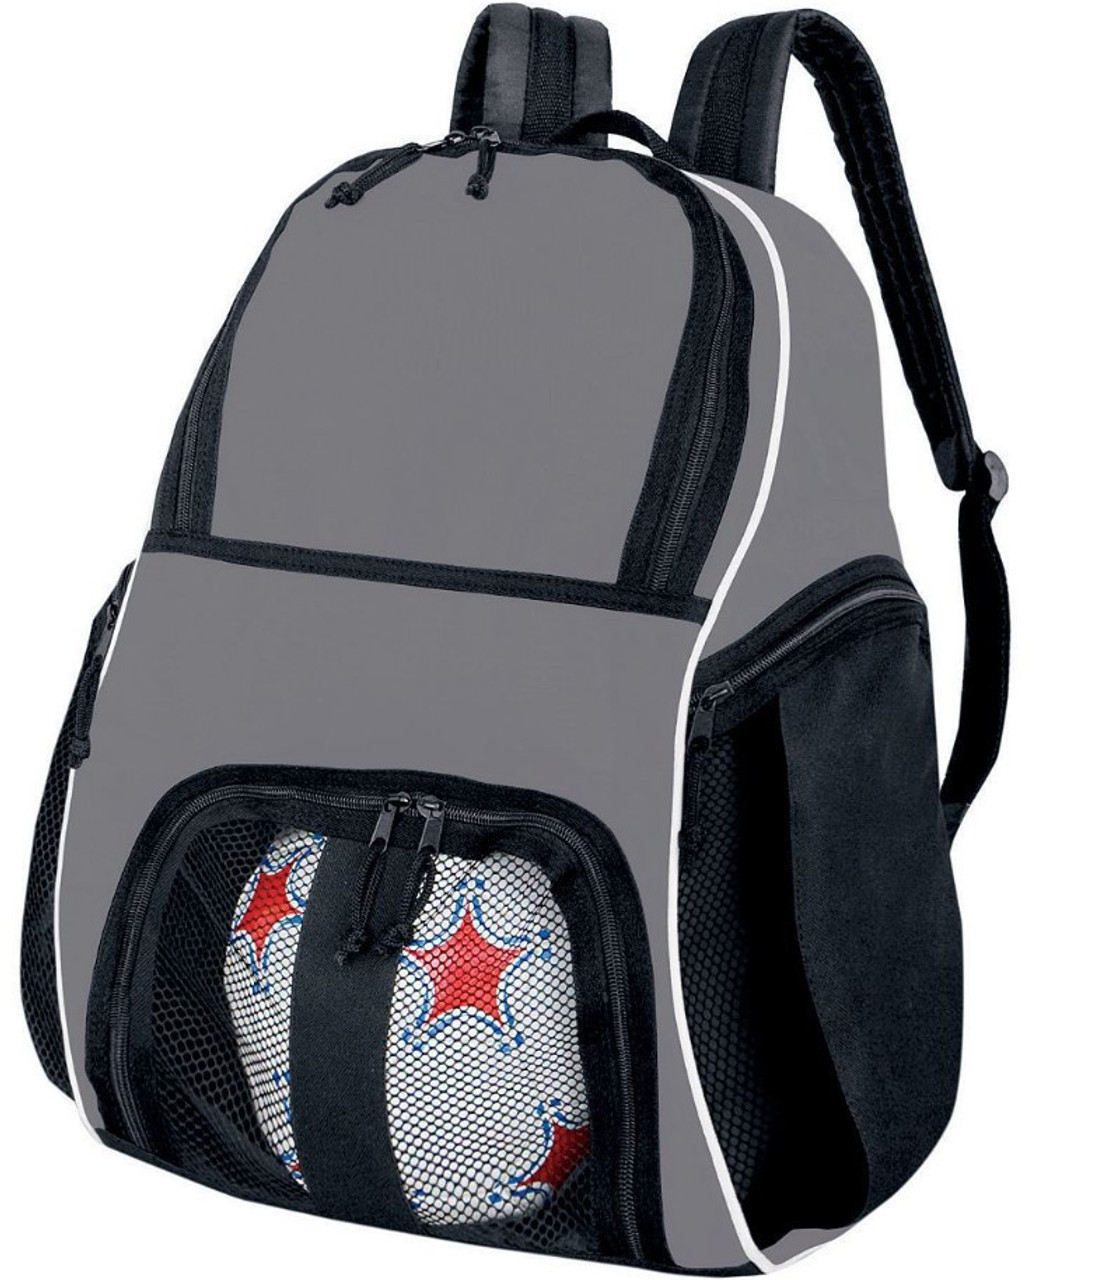 NEW Wilson AVP Volleyball Black & Yellow Backpack Bag | eBay